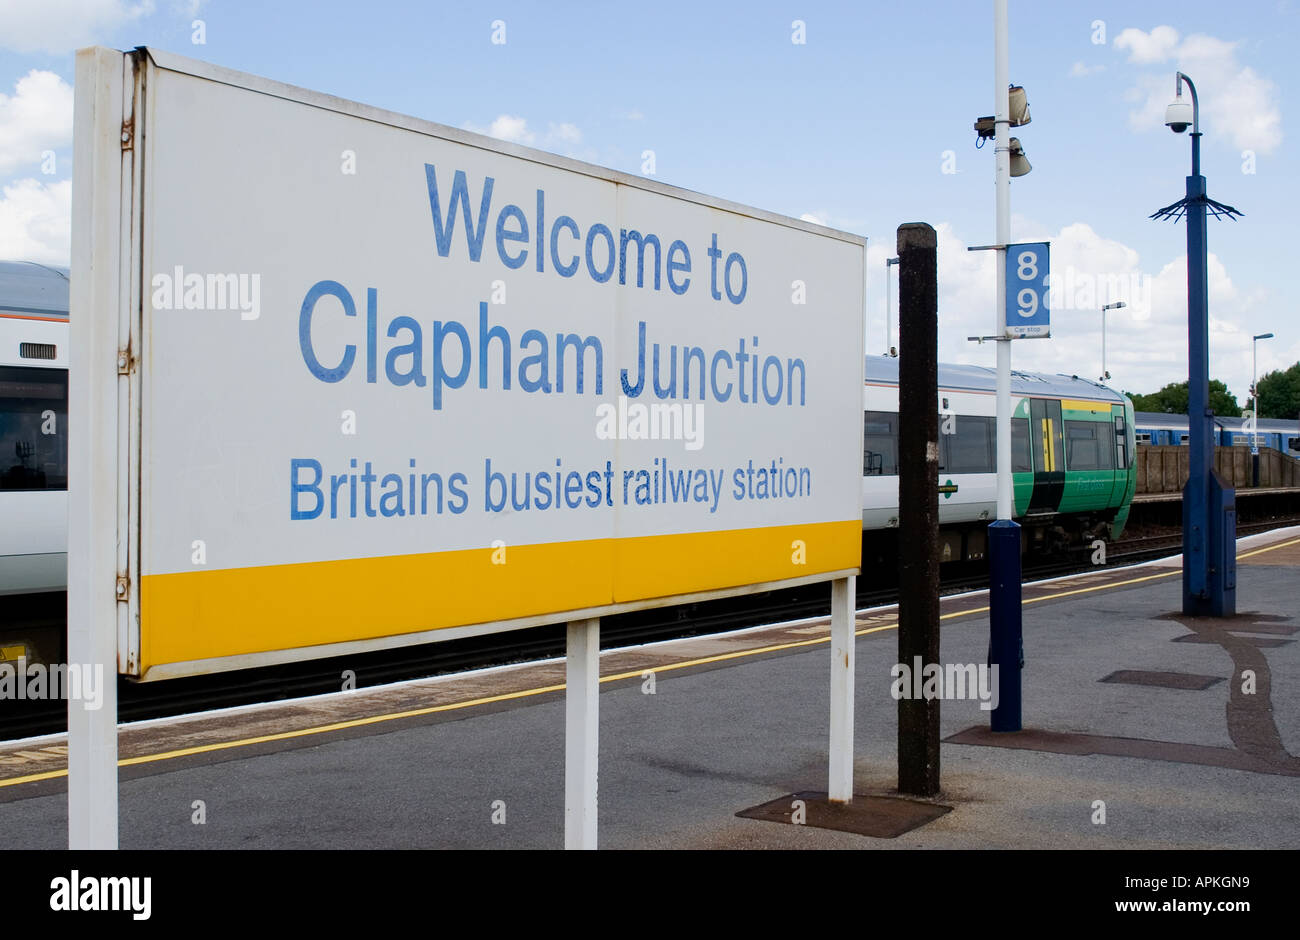 Clapham Junction Railway station, London, UK Banque D'Images